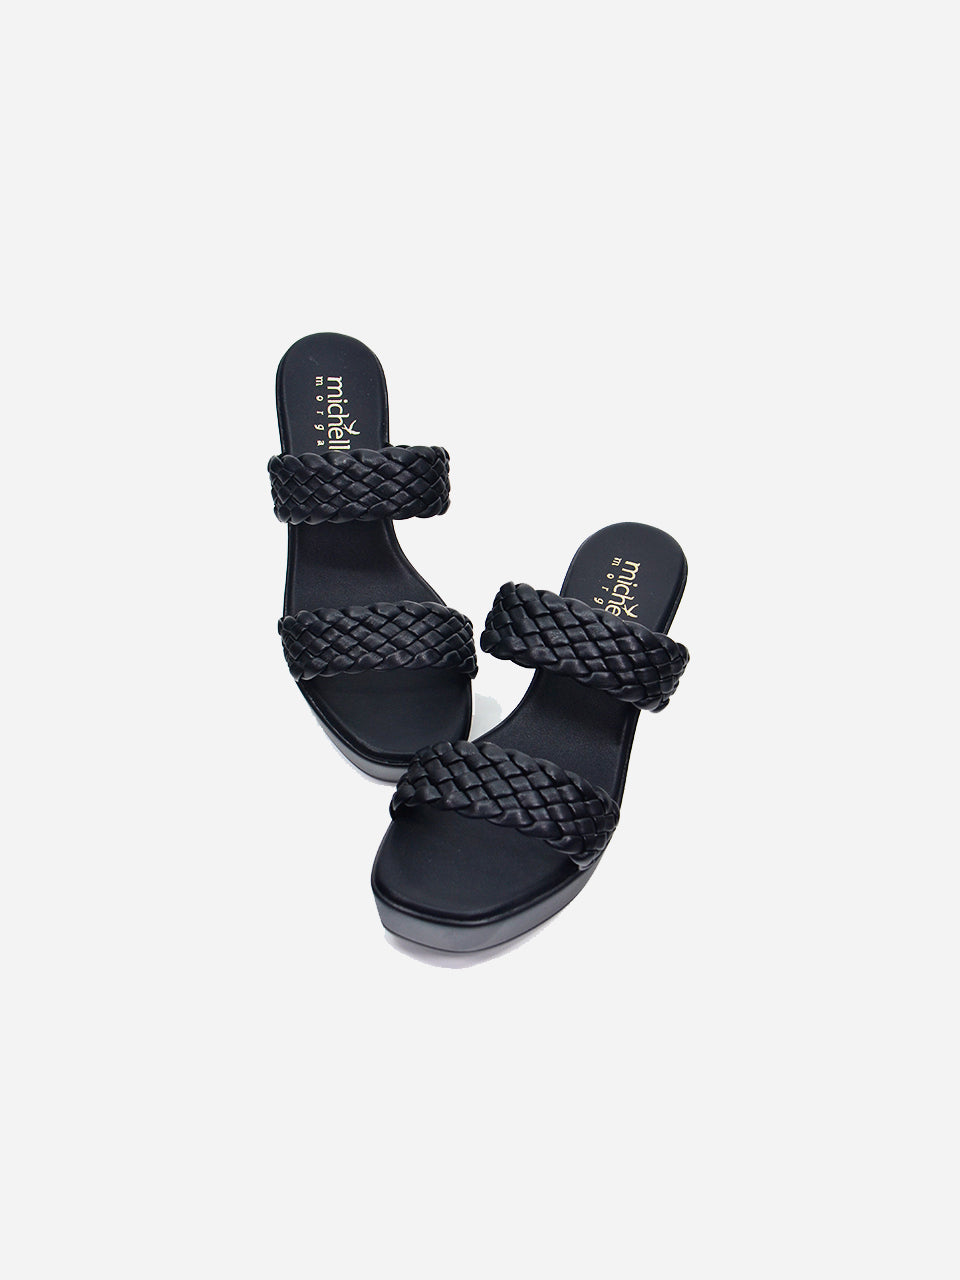 Michelle Morgan 114RJ85E Women's Braided Strap Sandals #color_Black